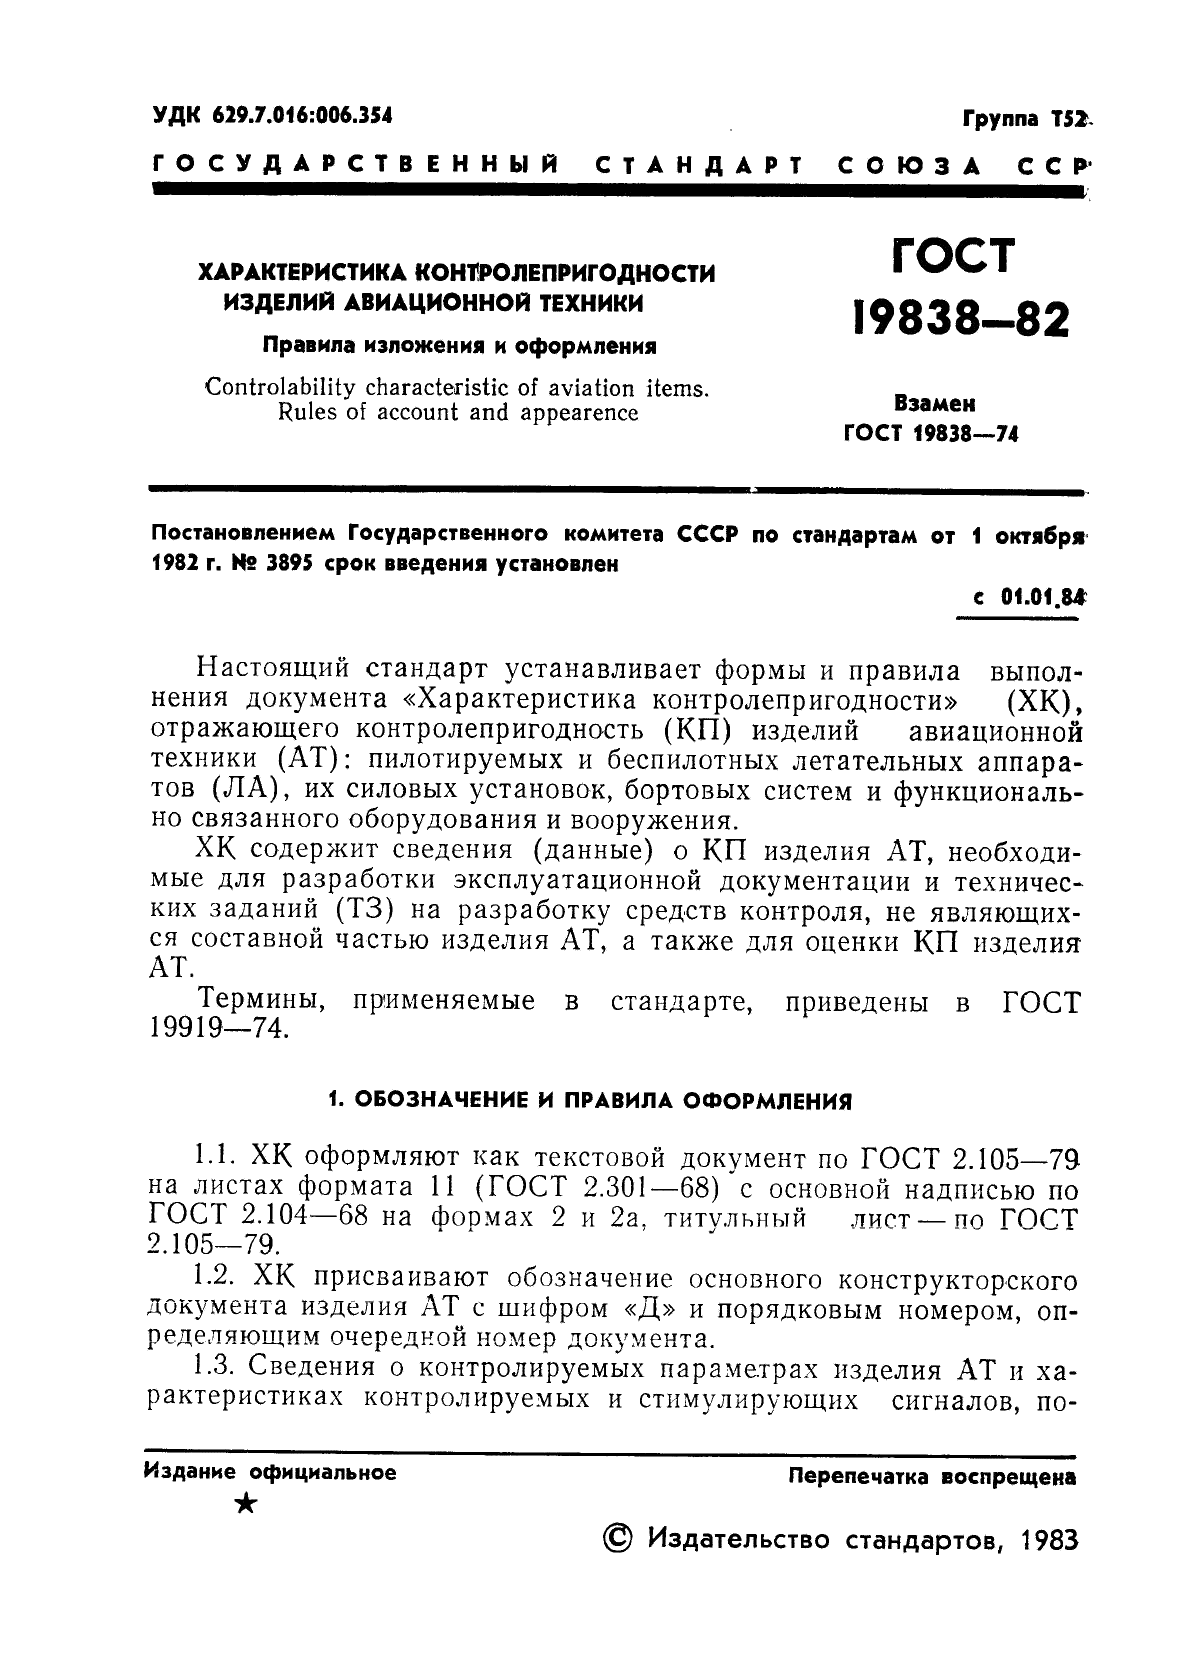 ГОСТ 19838-82